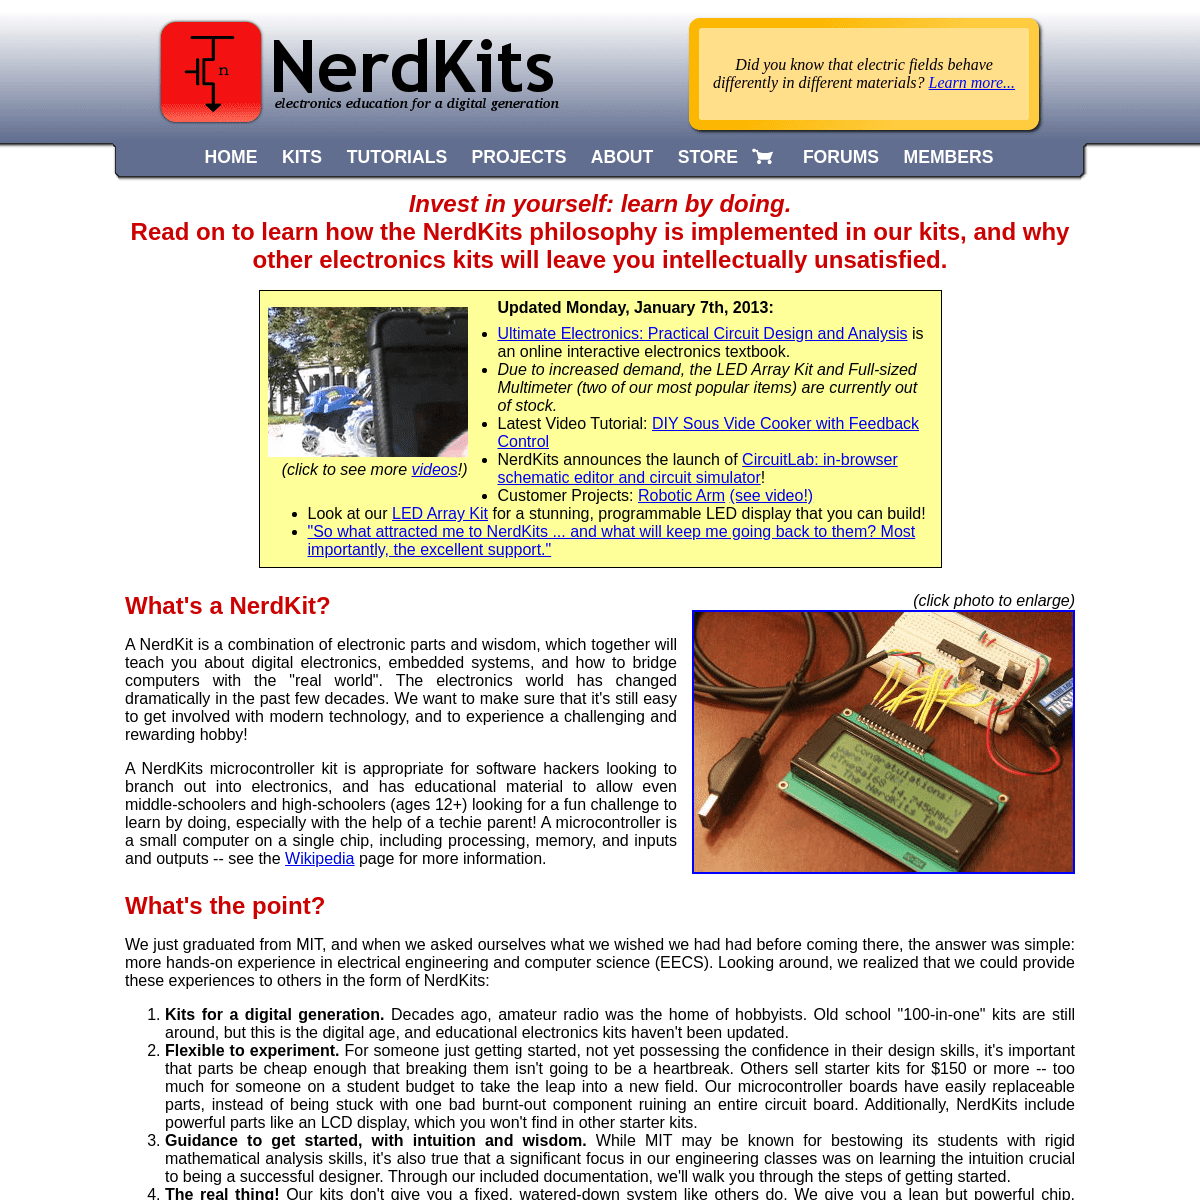 A complete backup of nerdkits.com